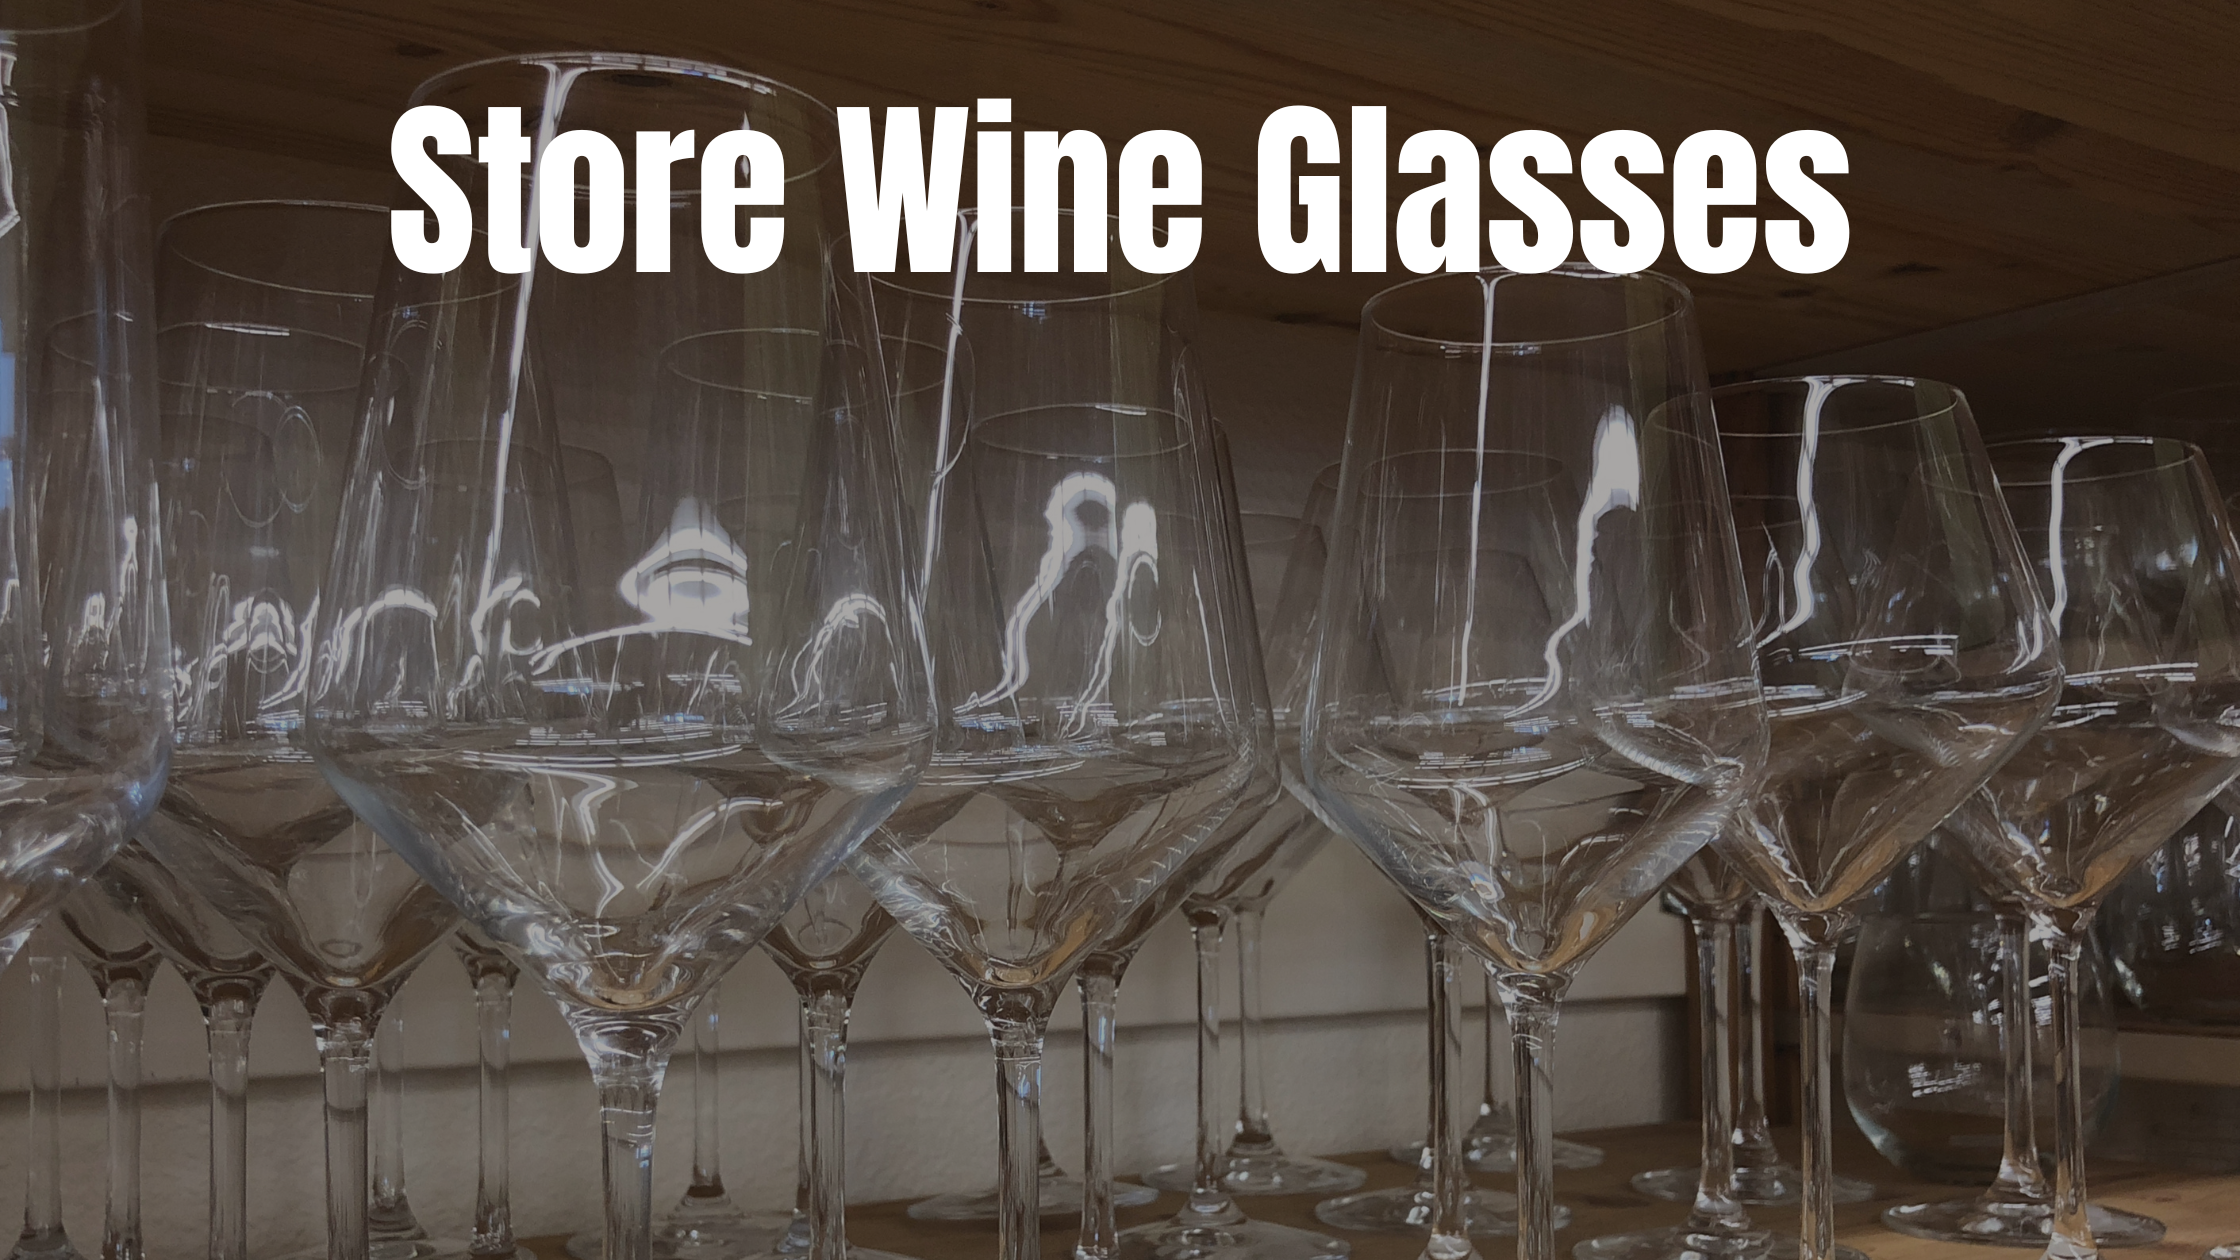 https://images.squarespace-cdn.com/content/v1/623e07ff3f5980785c3eeefb/e228a961-53e8-4942-afc8-dcfbaf74a1bd/Store+Wine+Glasses